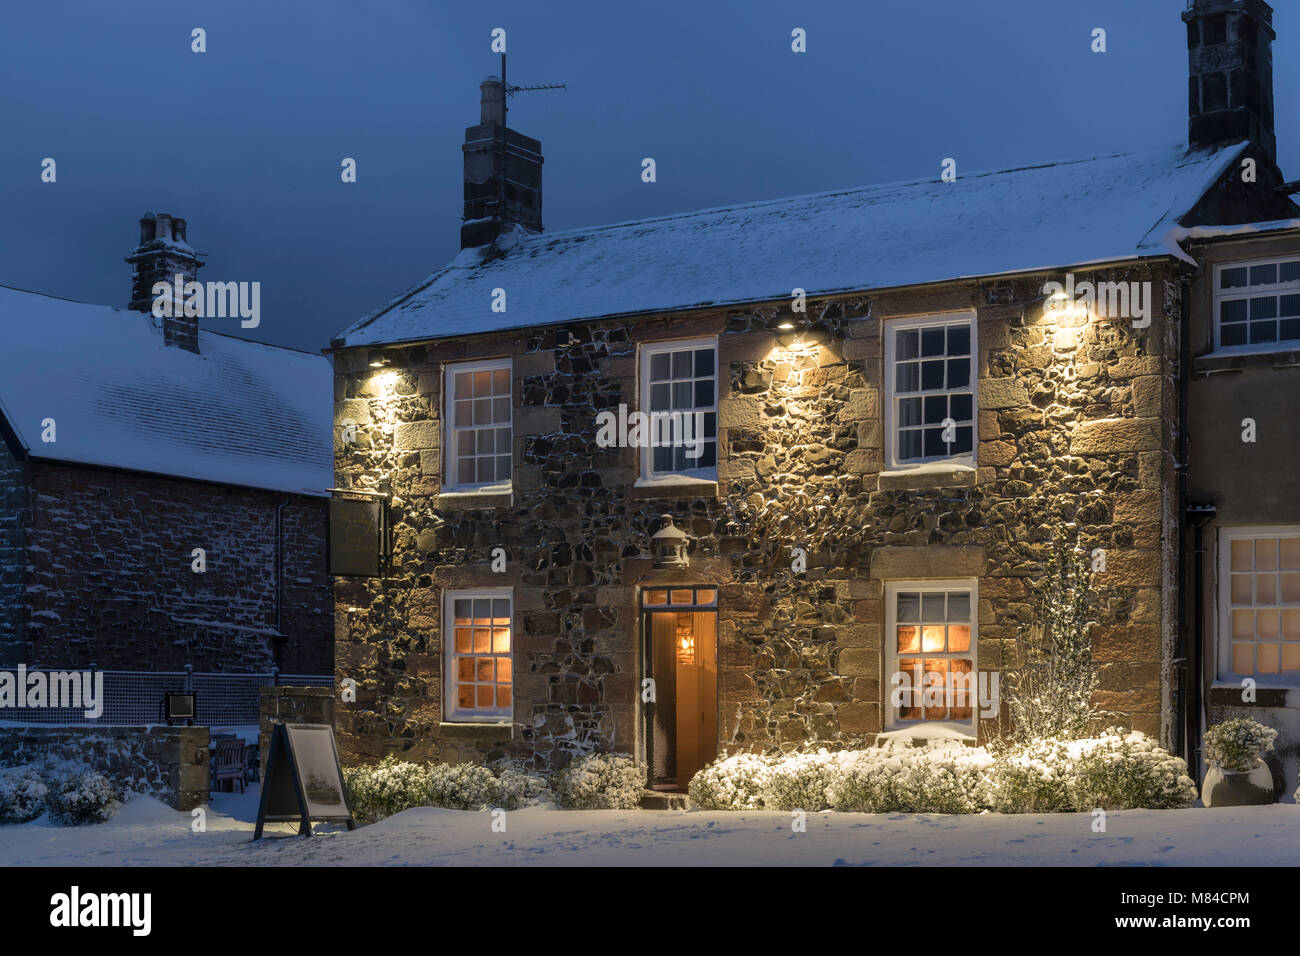 Accueillant village inn en hiver, Bamburgh Northumberland, en Angleterre. L'hiver (février) 2018. Banque D'Images